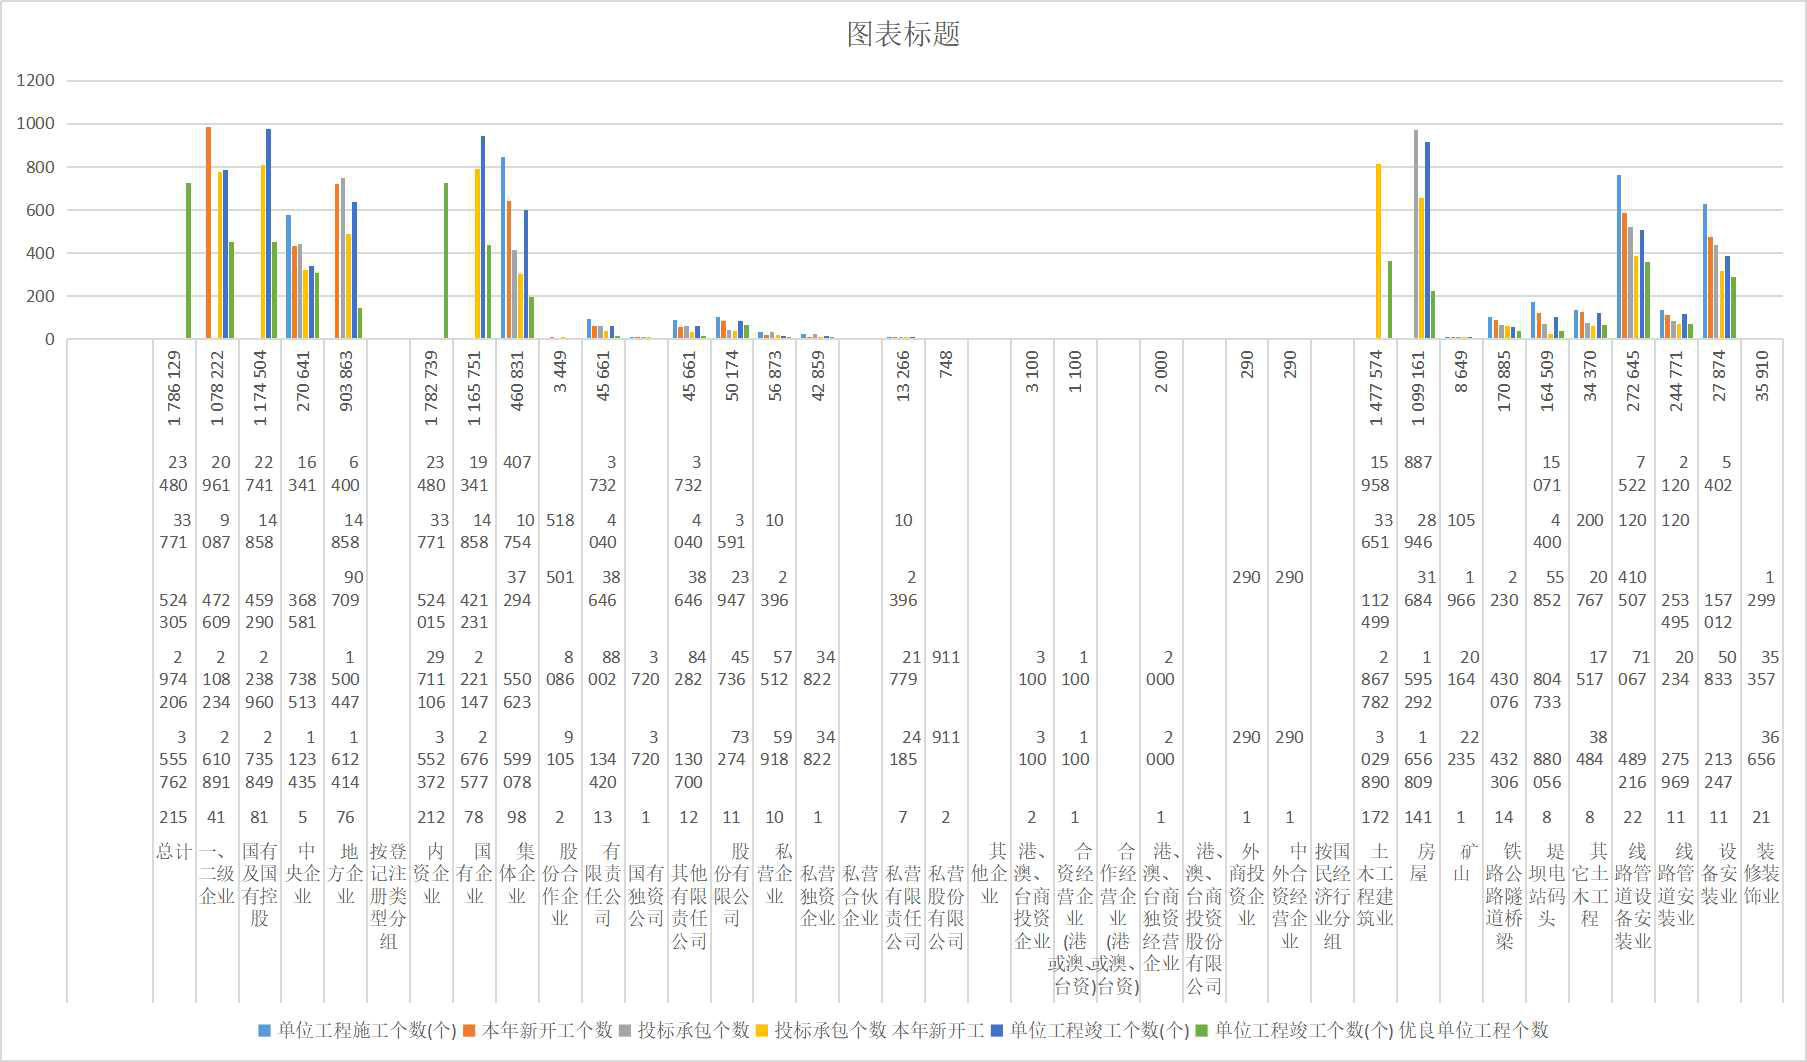 Production situation of construction enterprises in Qinghai Province (1998-2000)